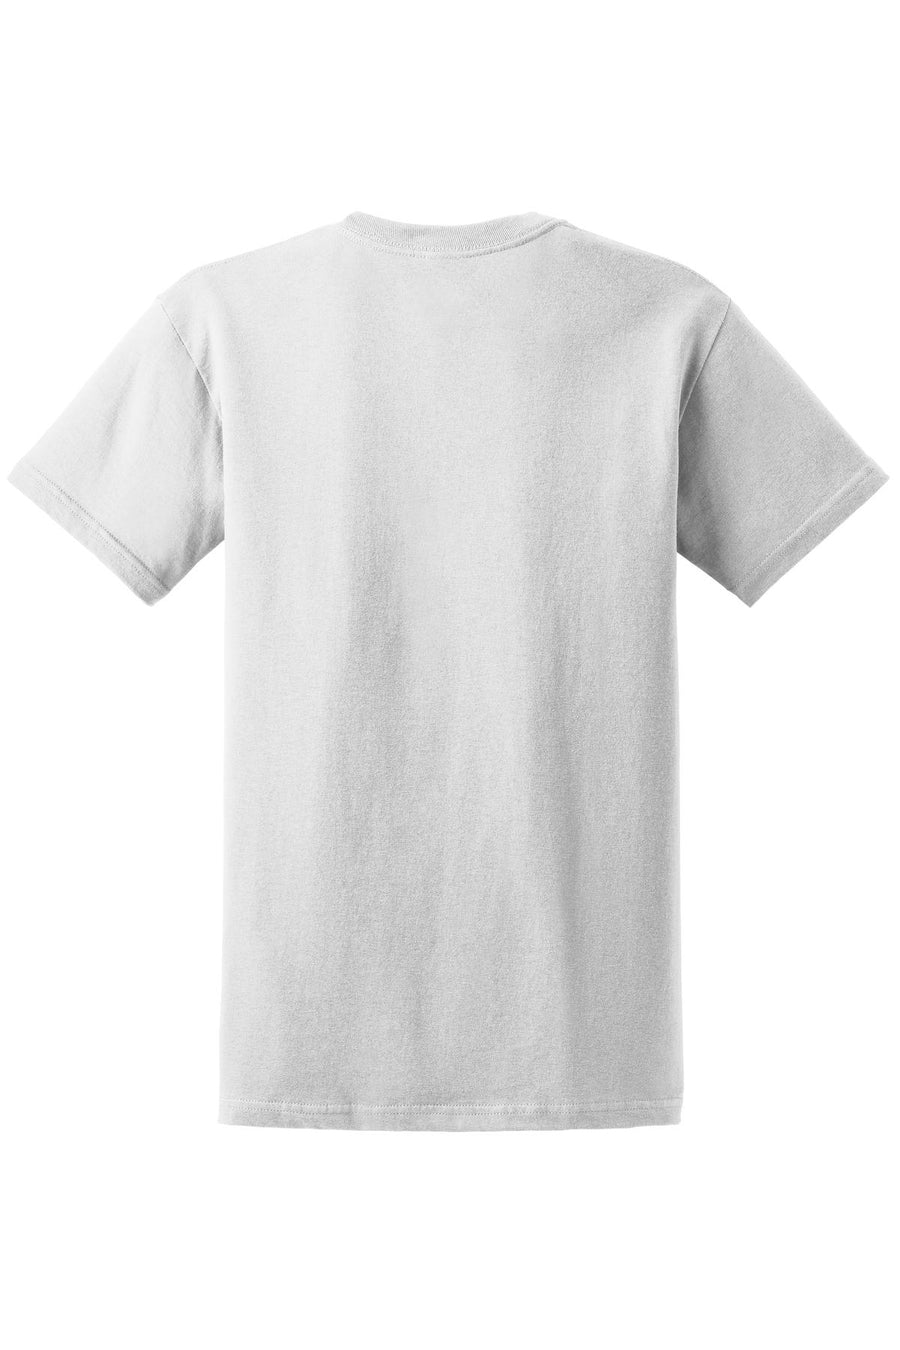 FUKITAL Palm Tree Edition WHITE T-Shirt by Sons of Arthritis